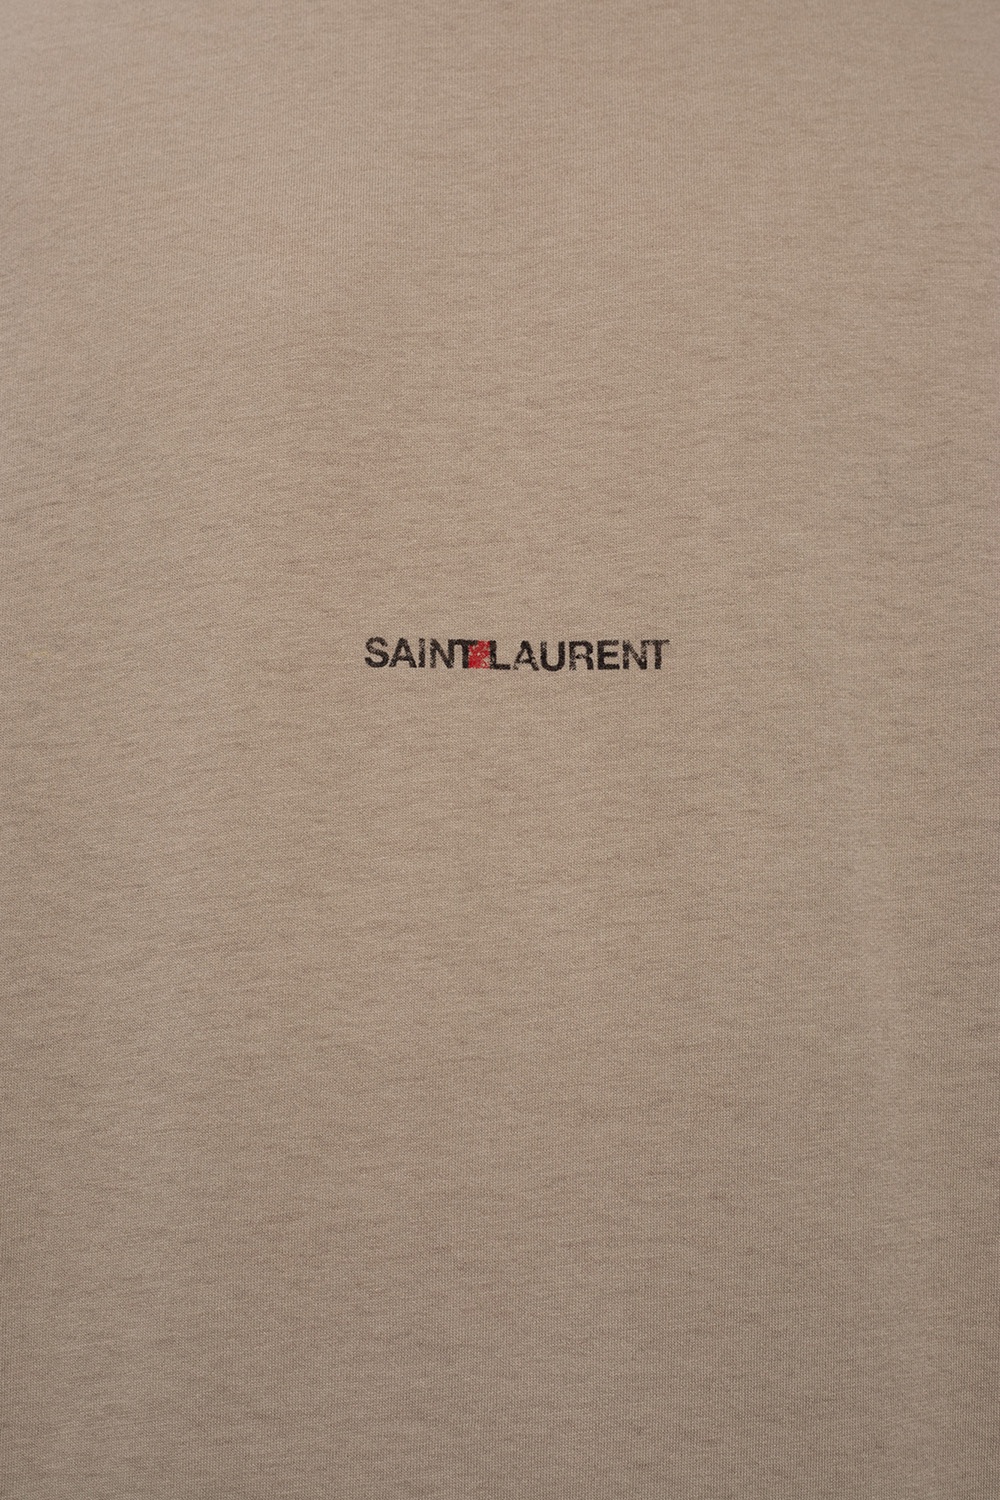 Saint Laurent saint laurent white monogram bag